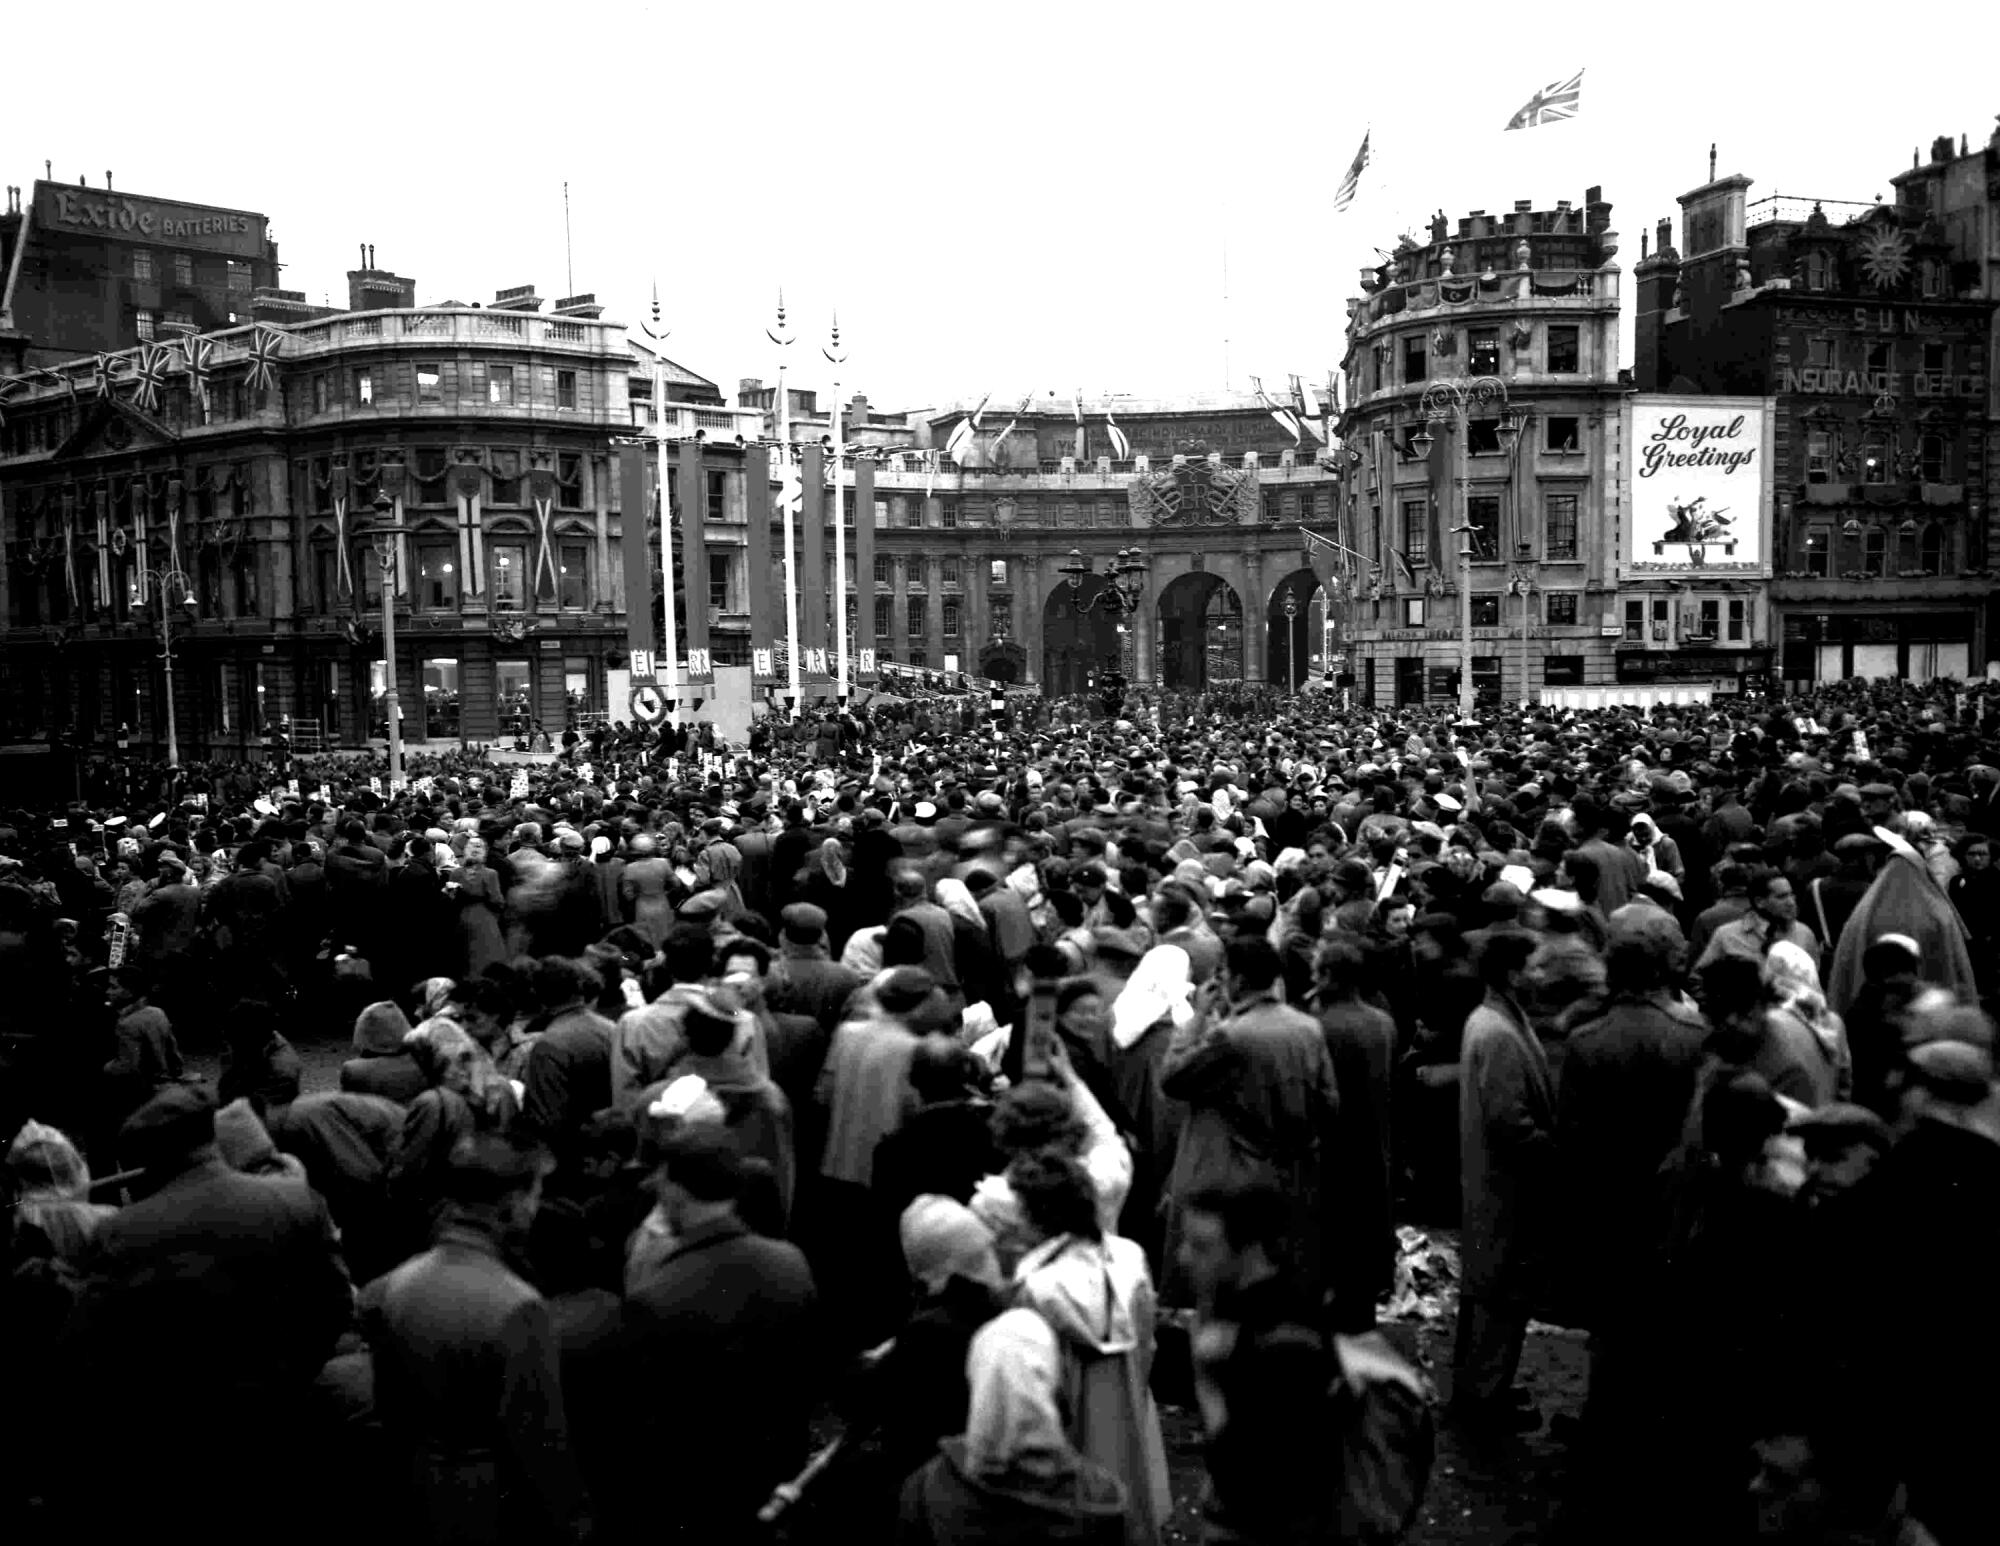 Crowds gather near buildings